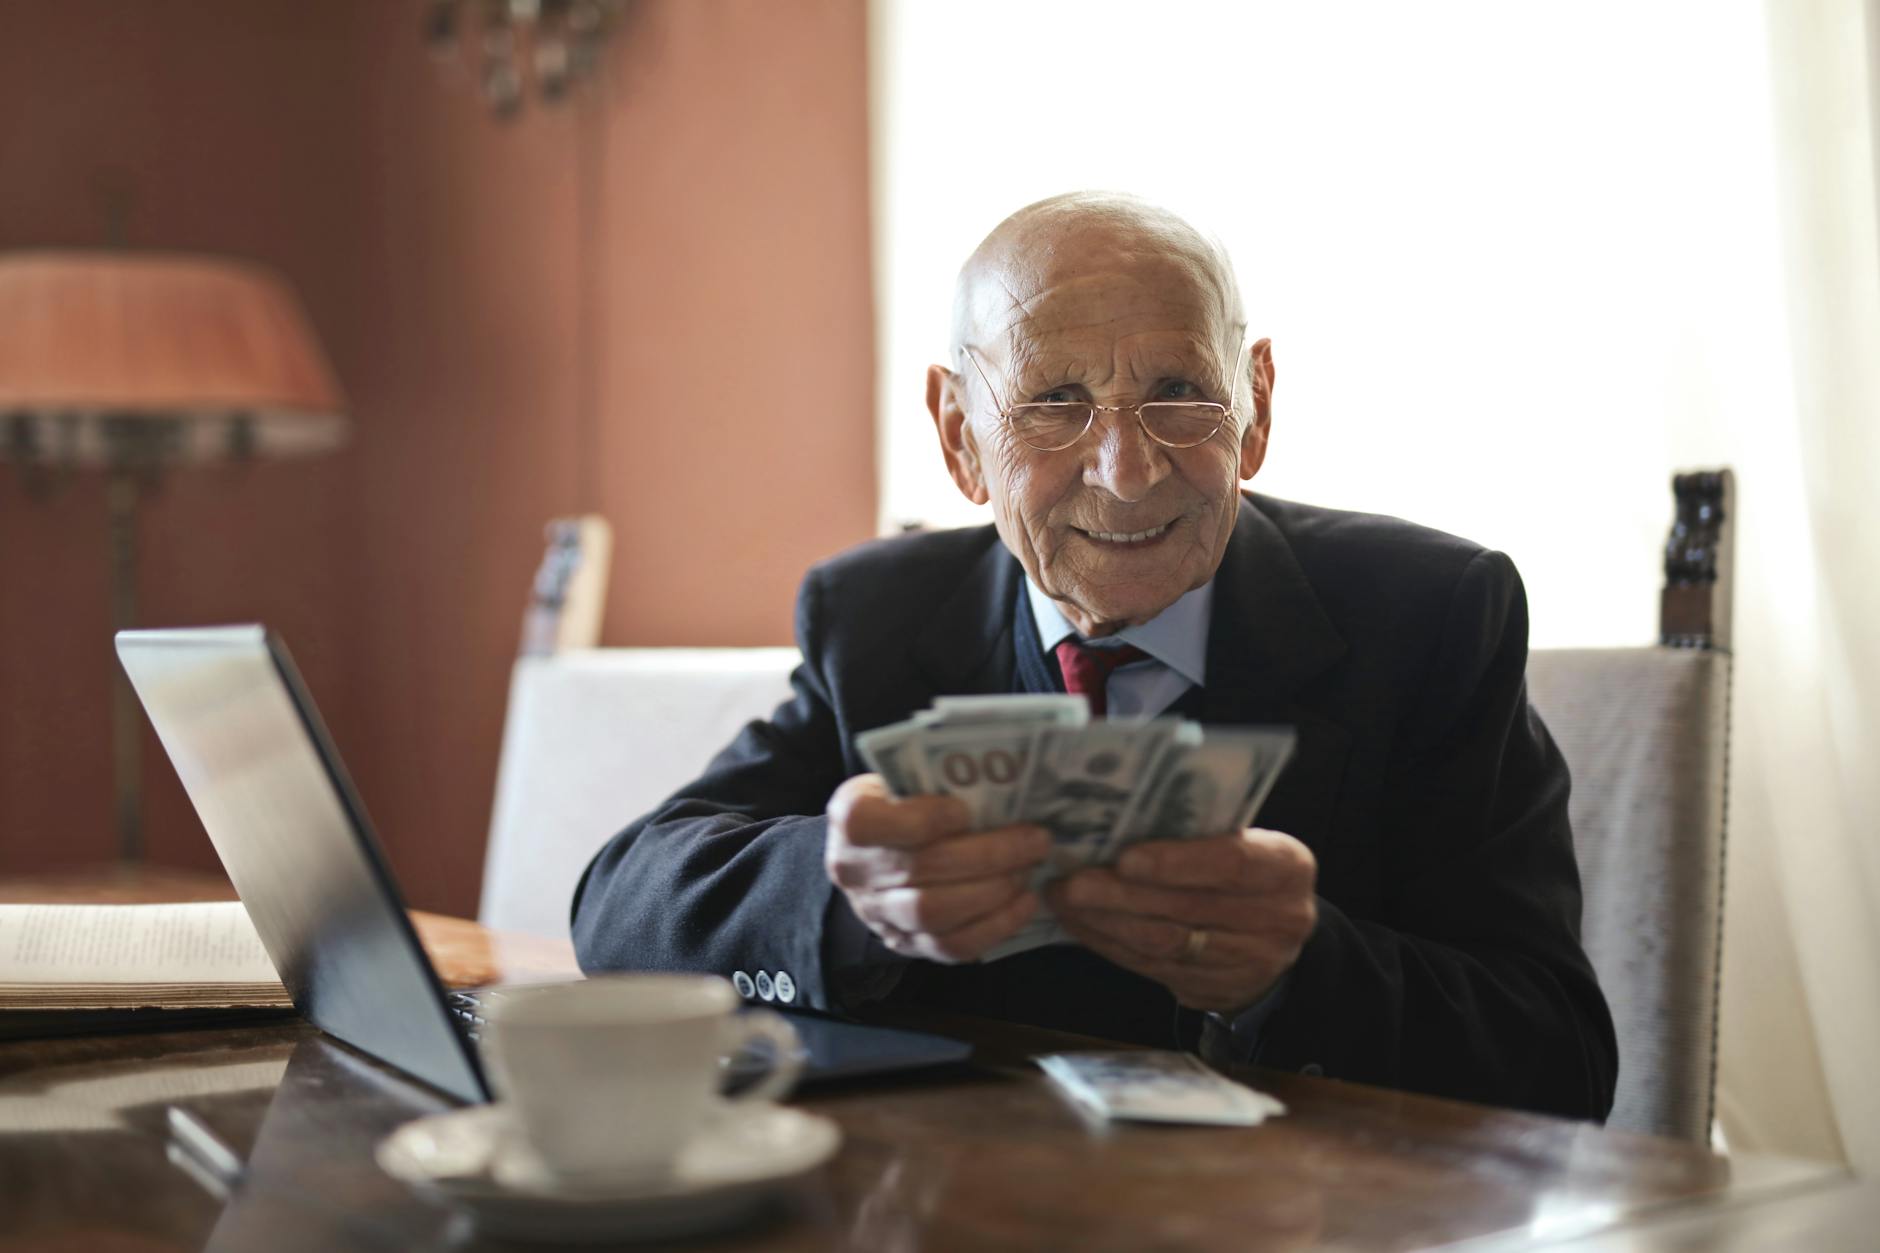 5 Retirement Accounts You Should Consider